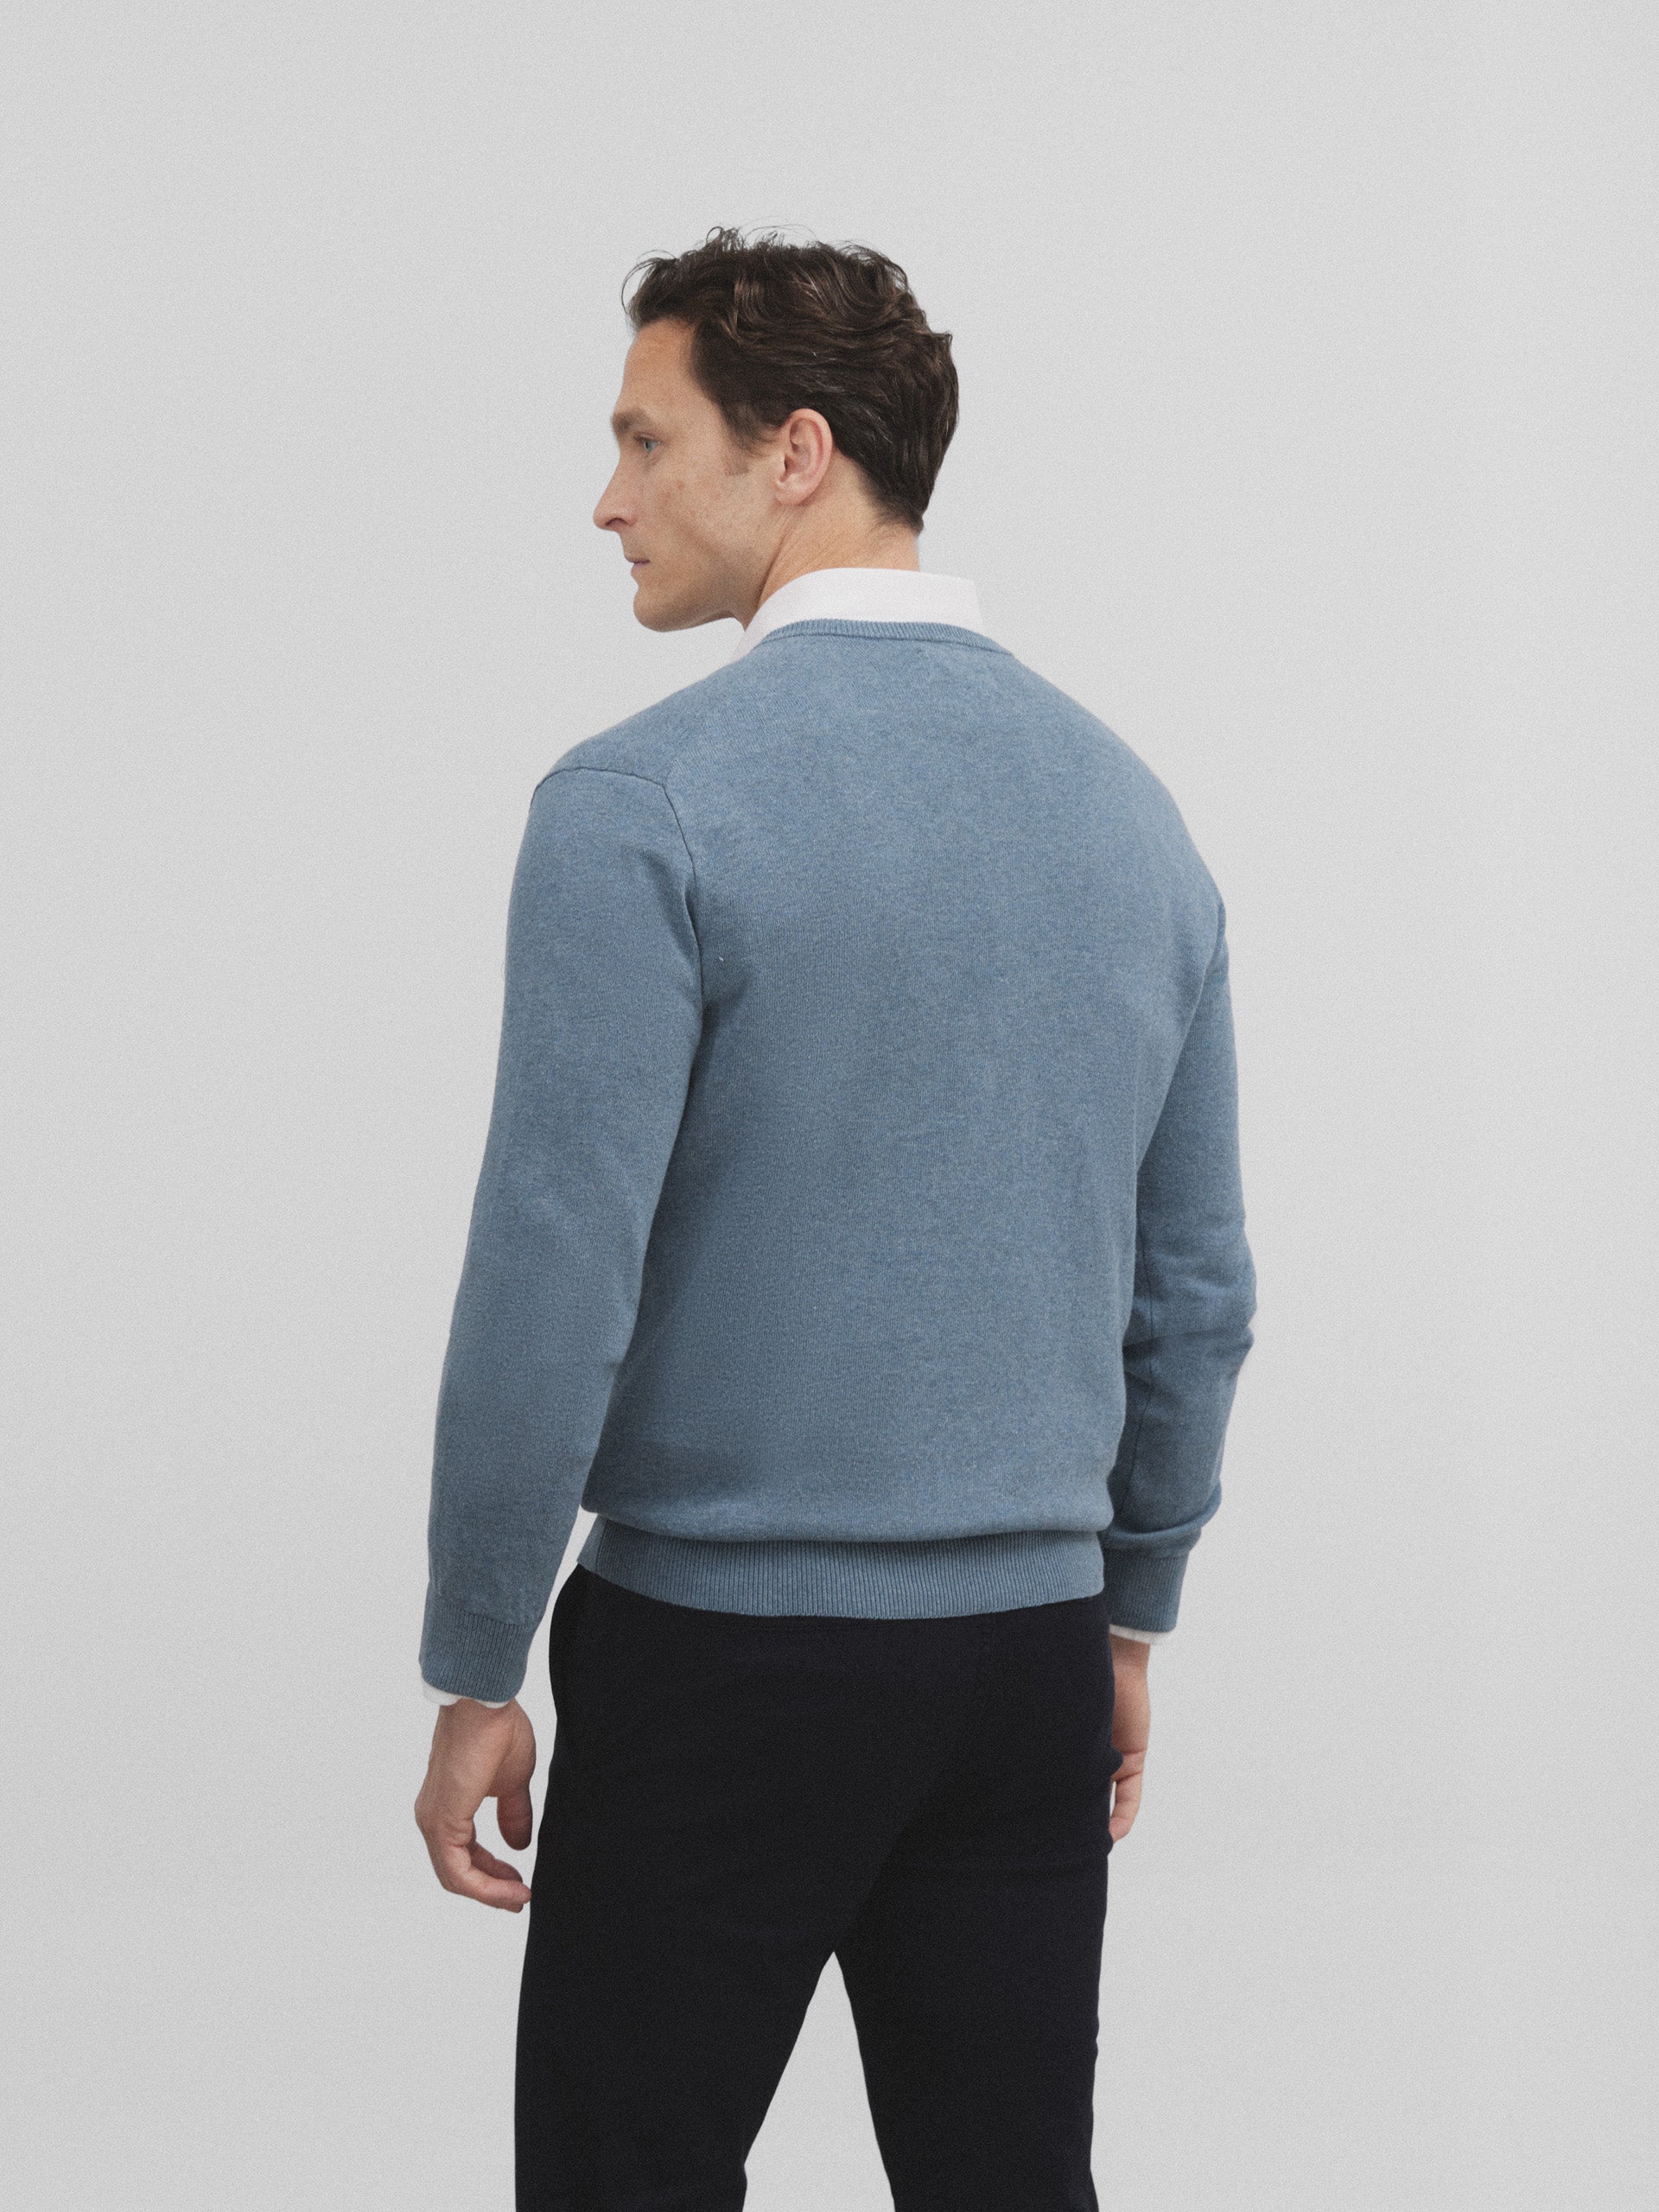 Gray blue v-neck sweater